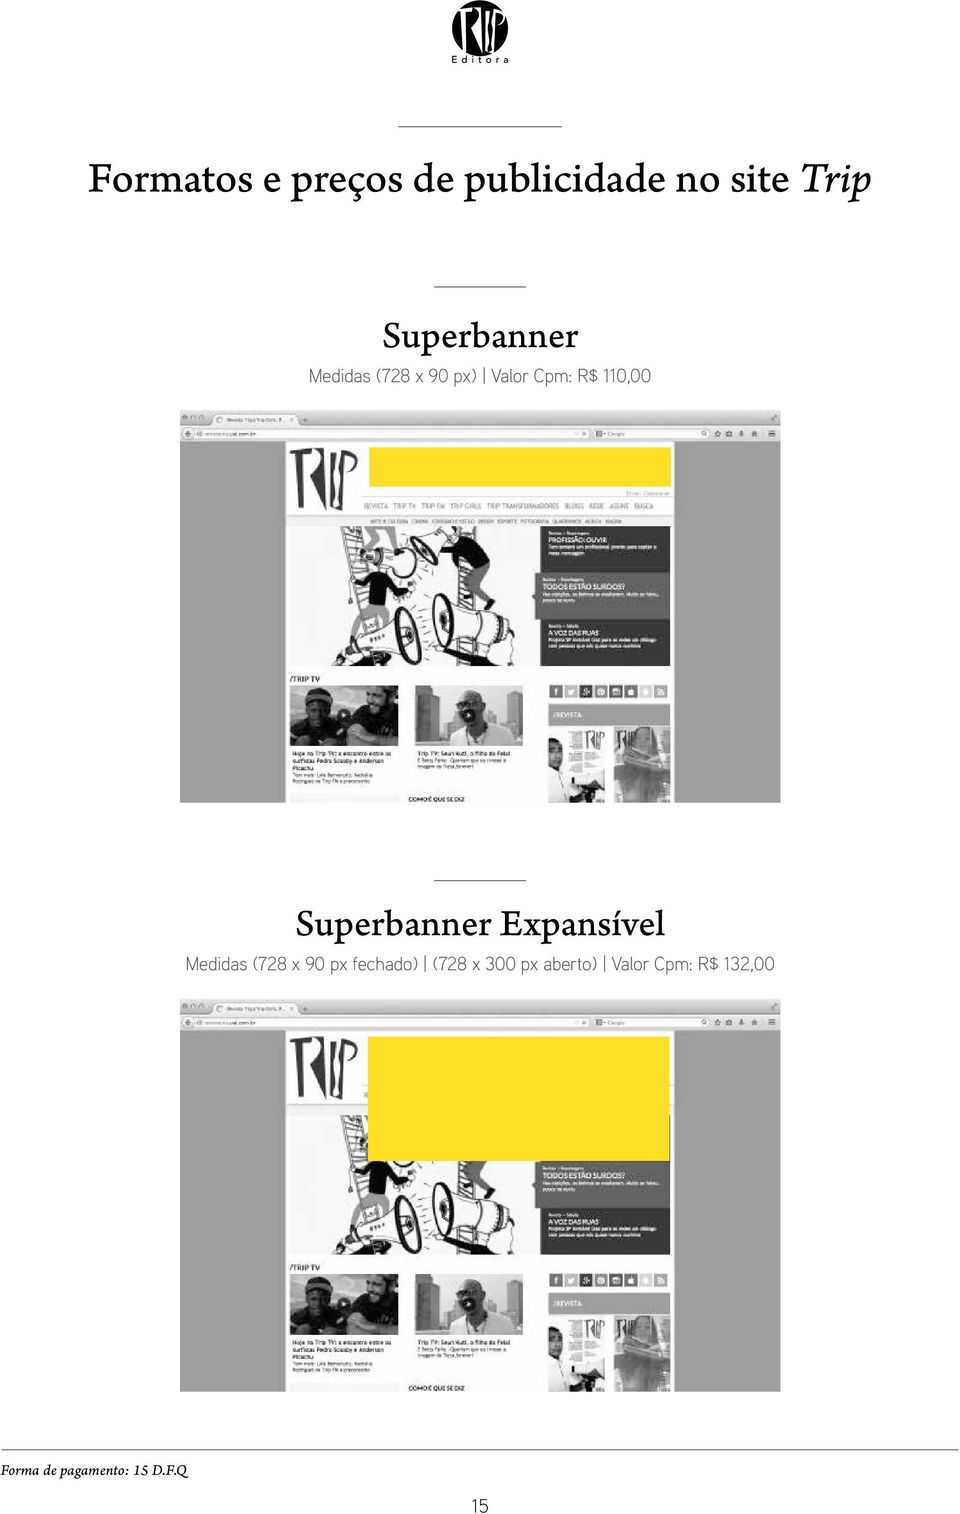 Superbanner Expansível Medidas (728 x 90 px fechado)